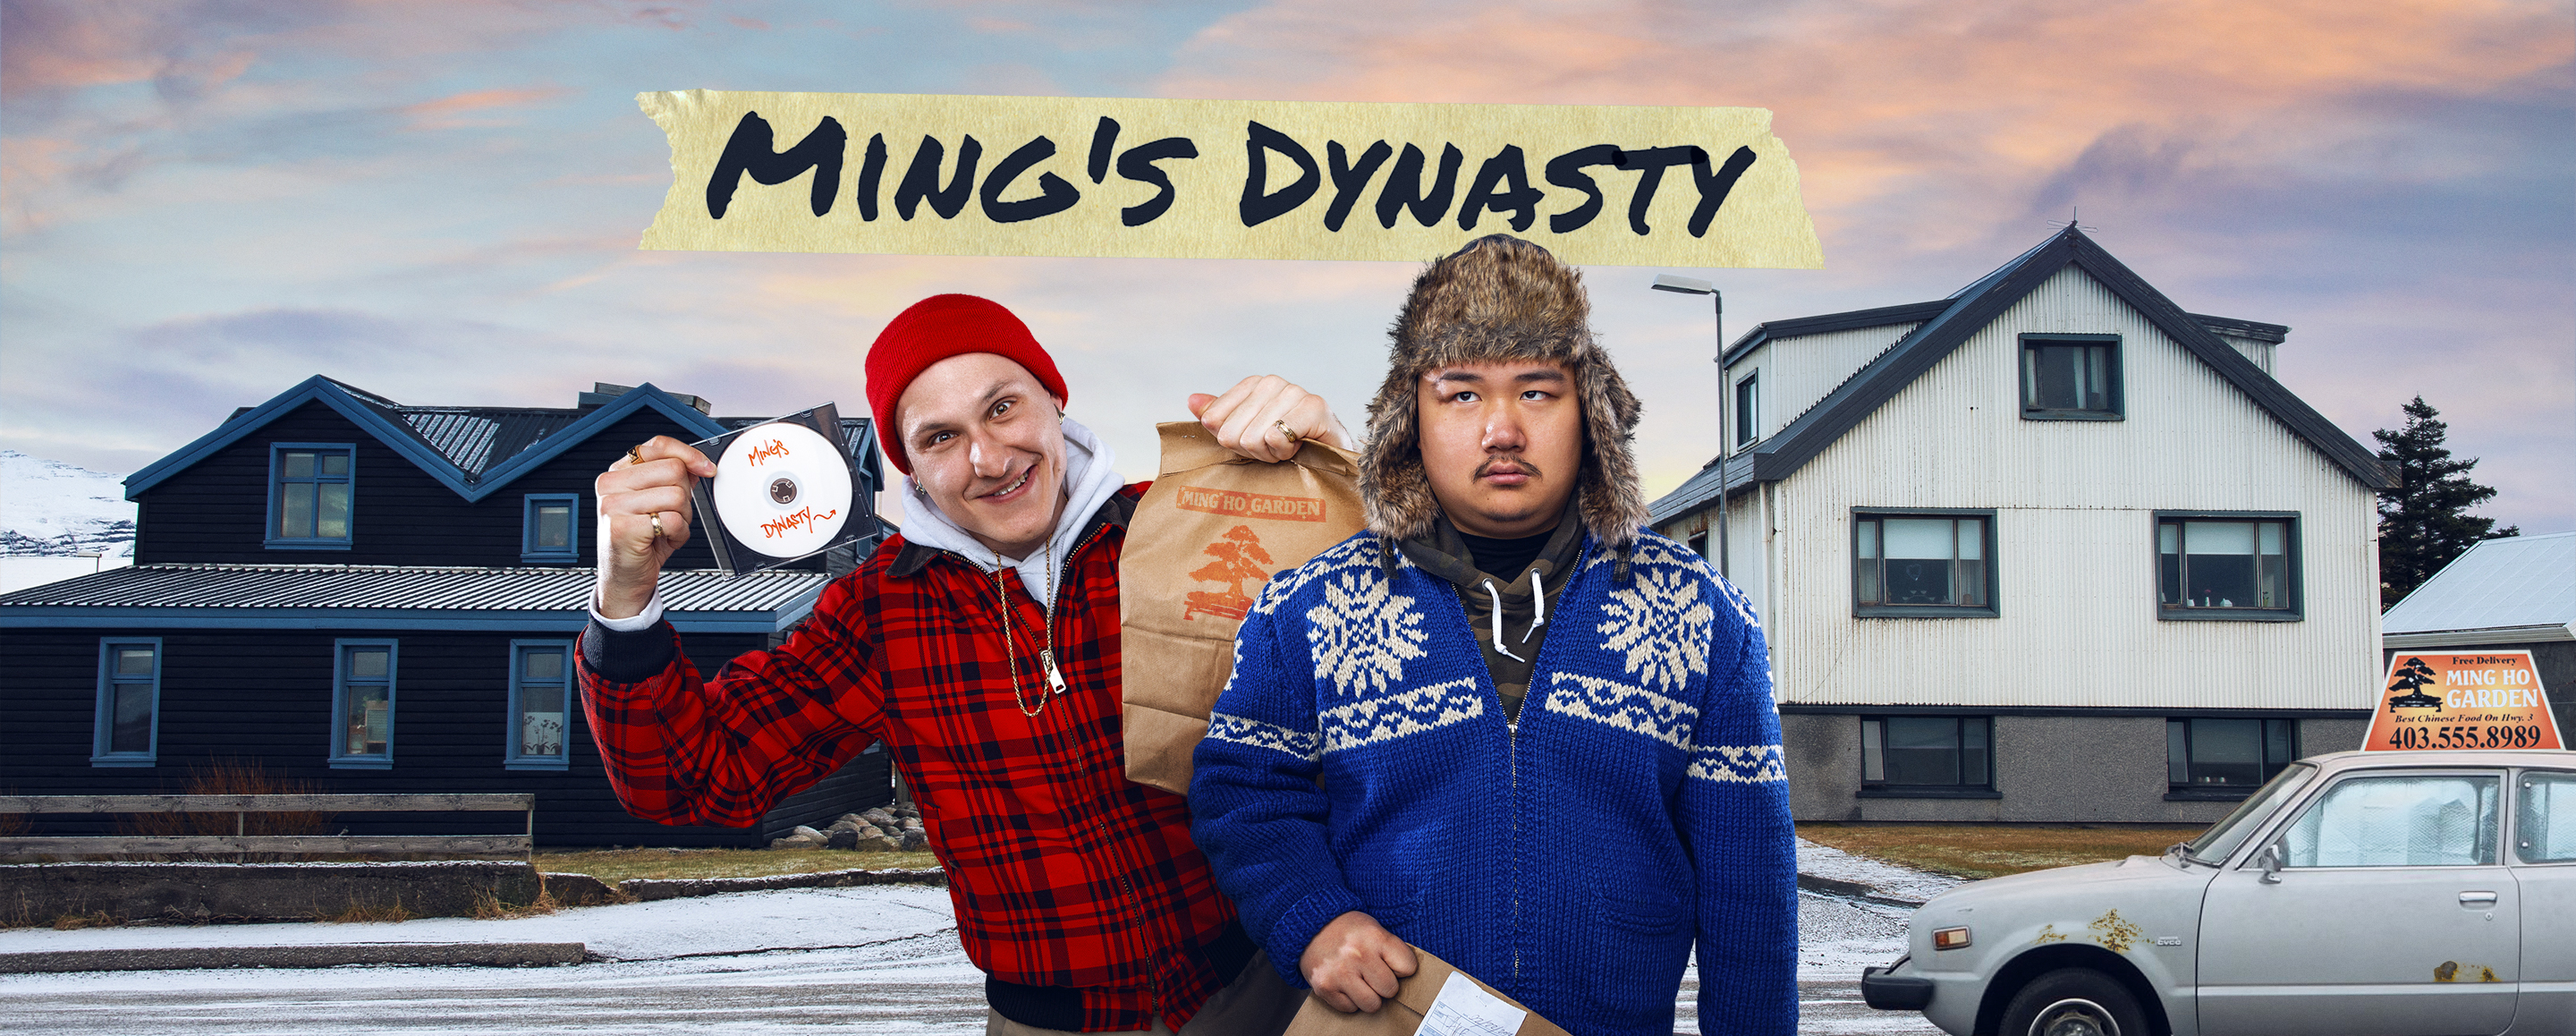 Ming's Dynasty